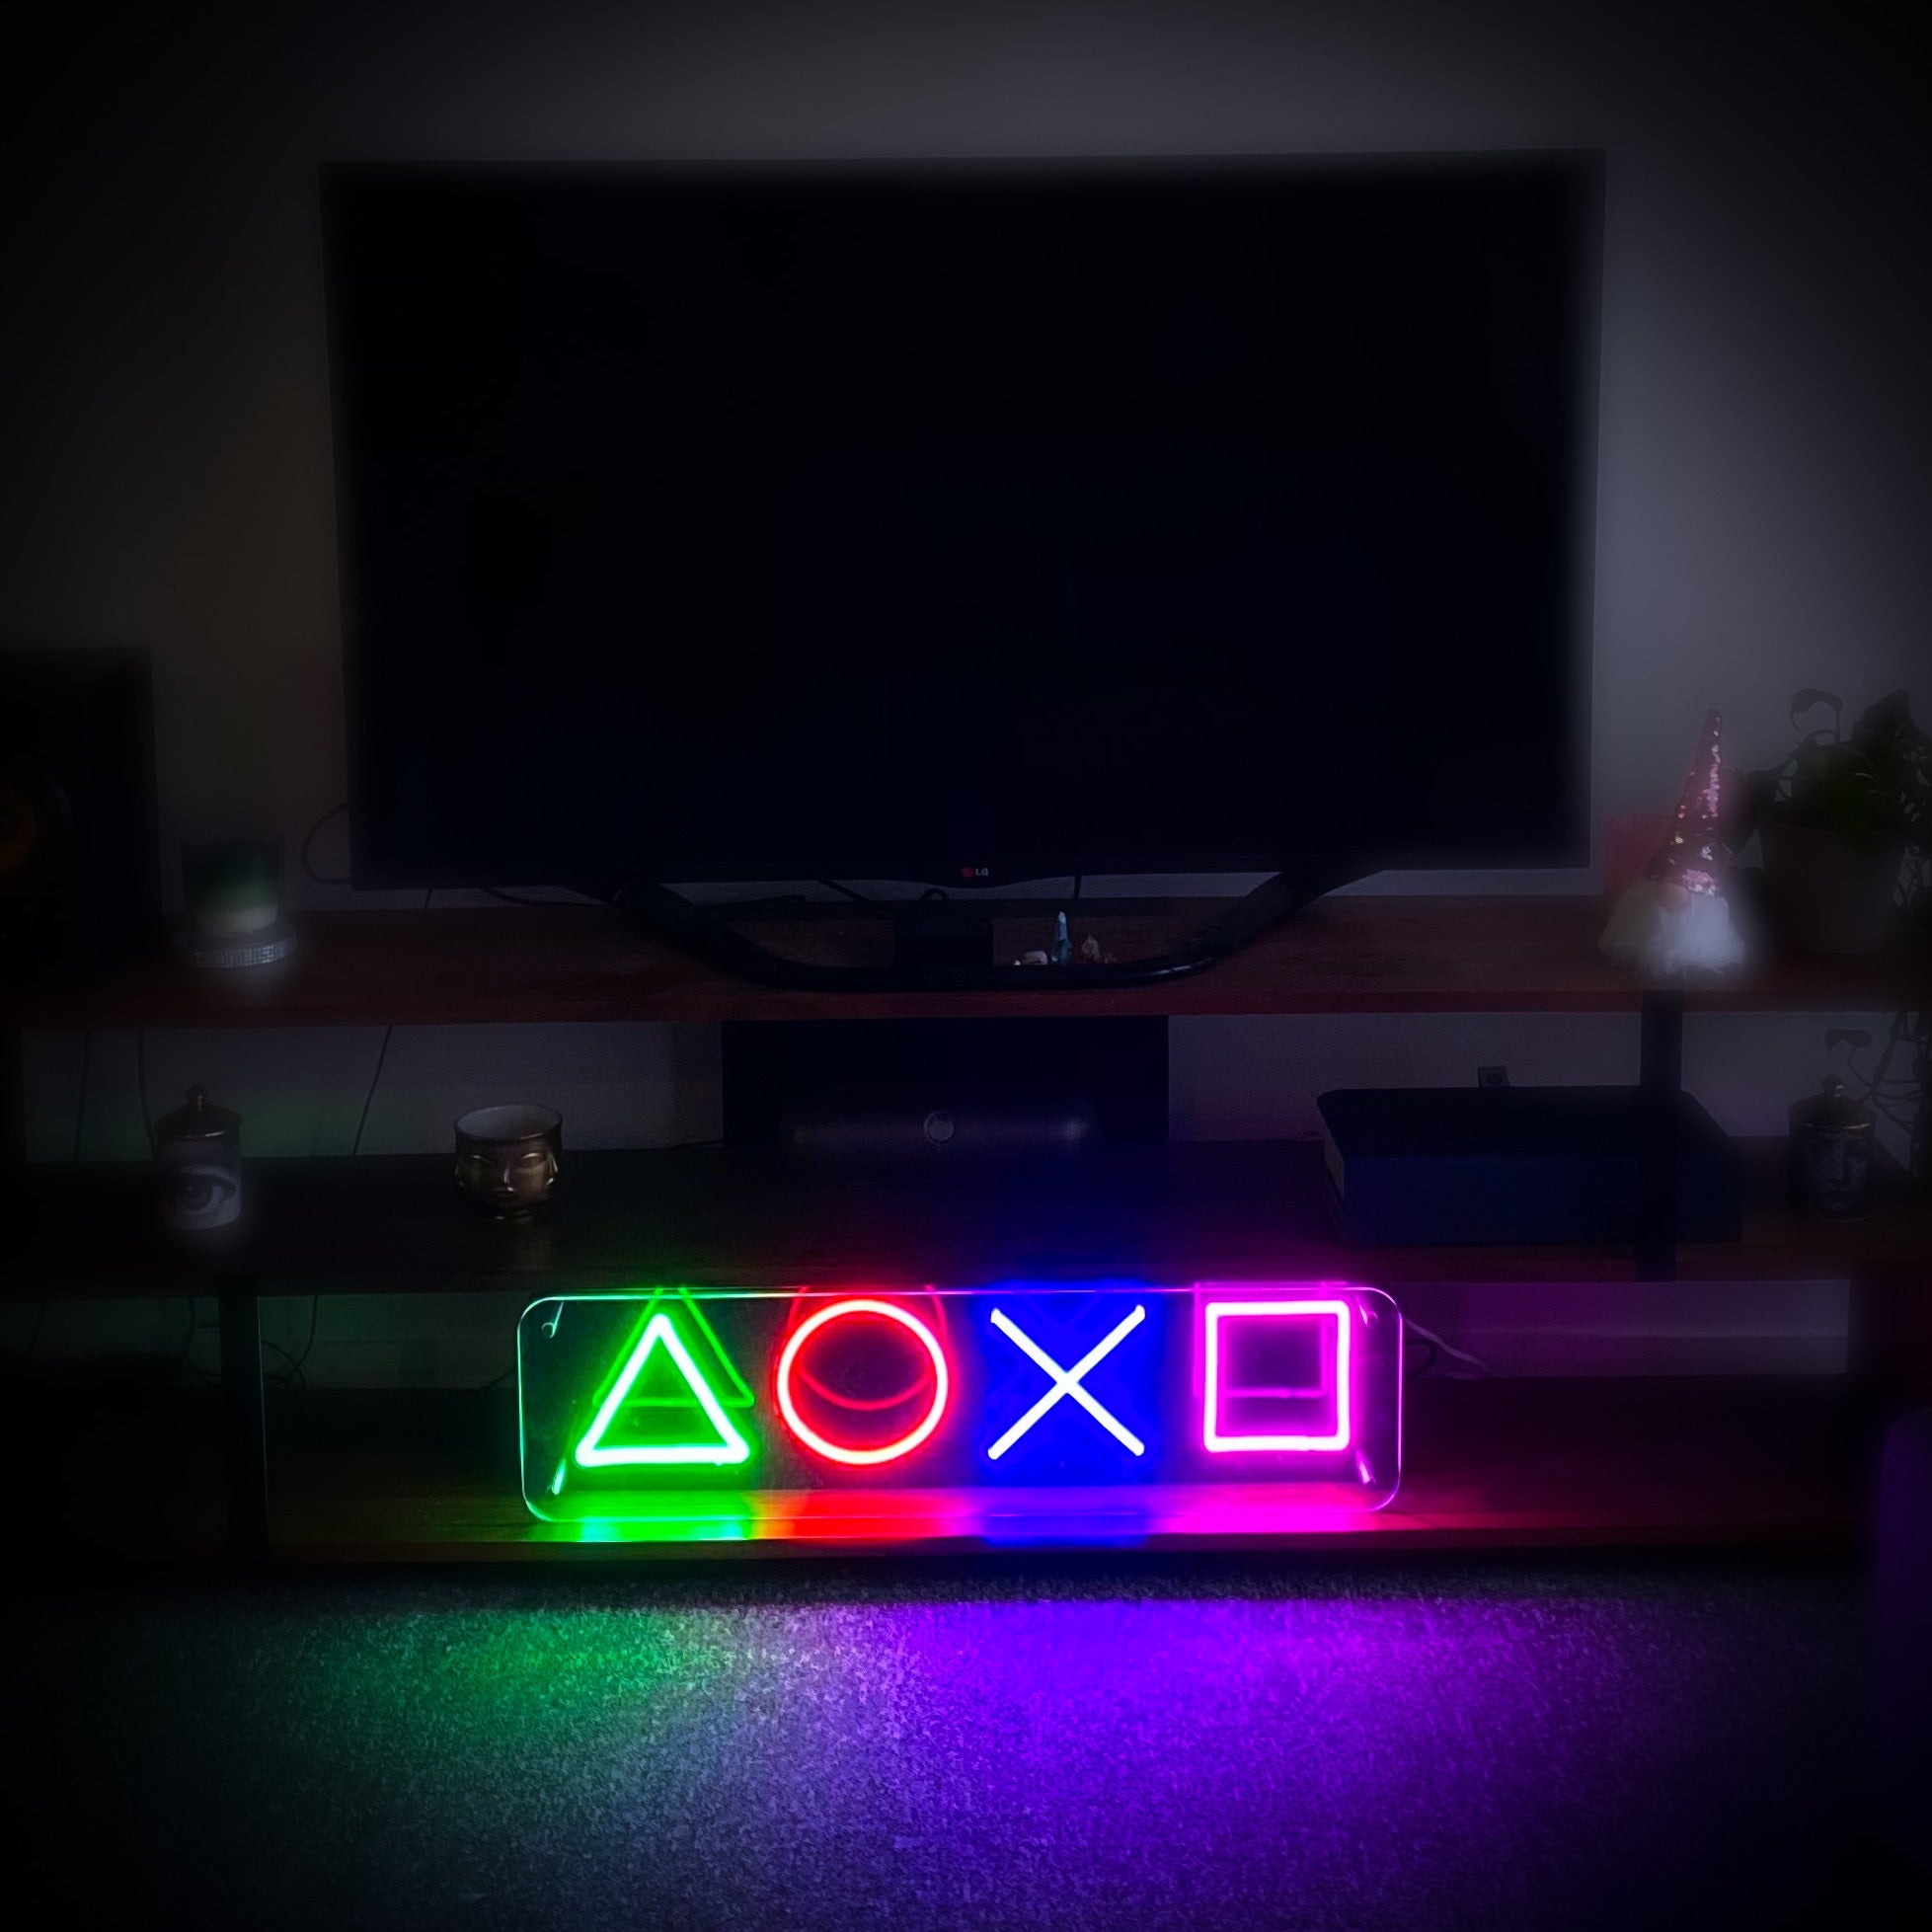 Playstation Keys - Custom LED Neon-Style Sign